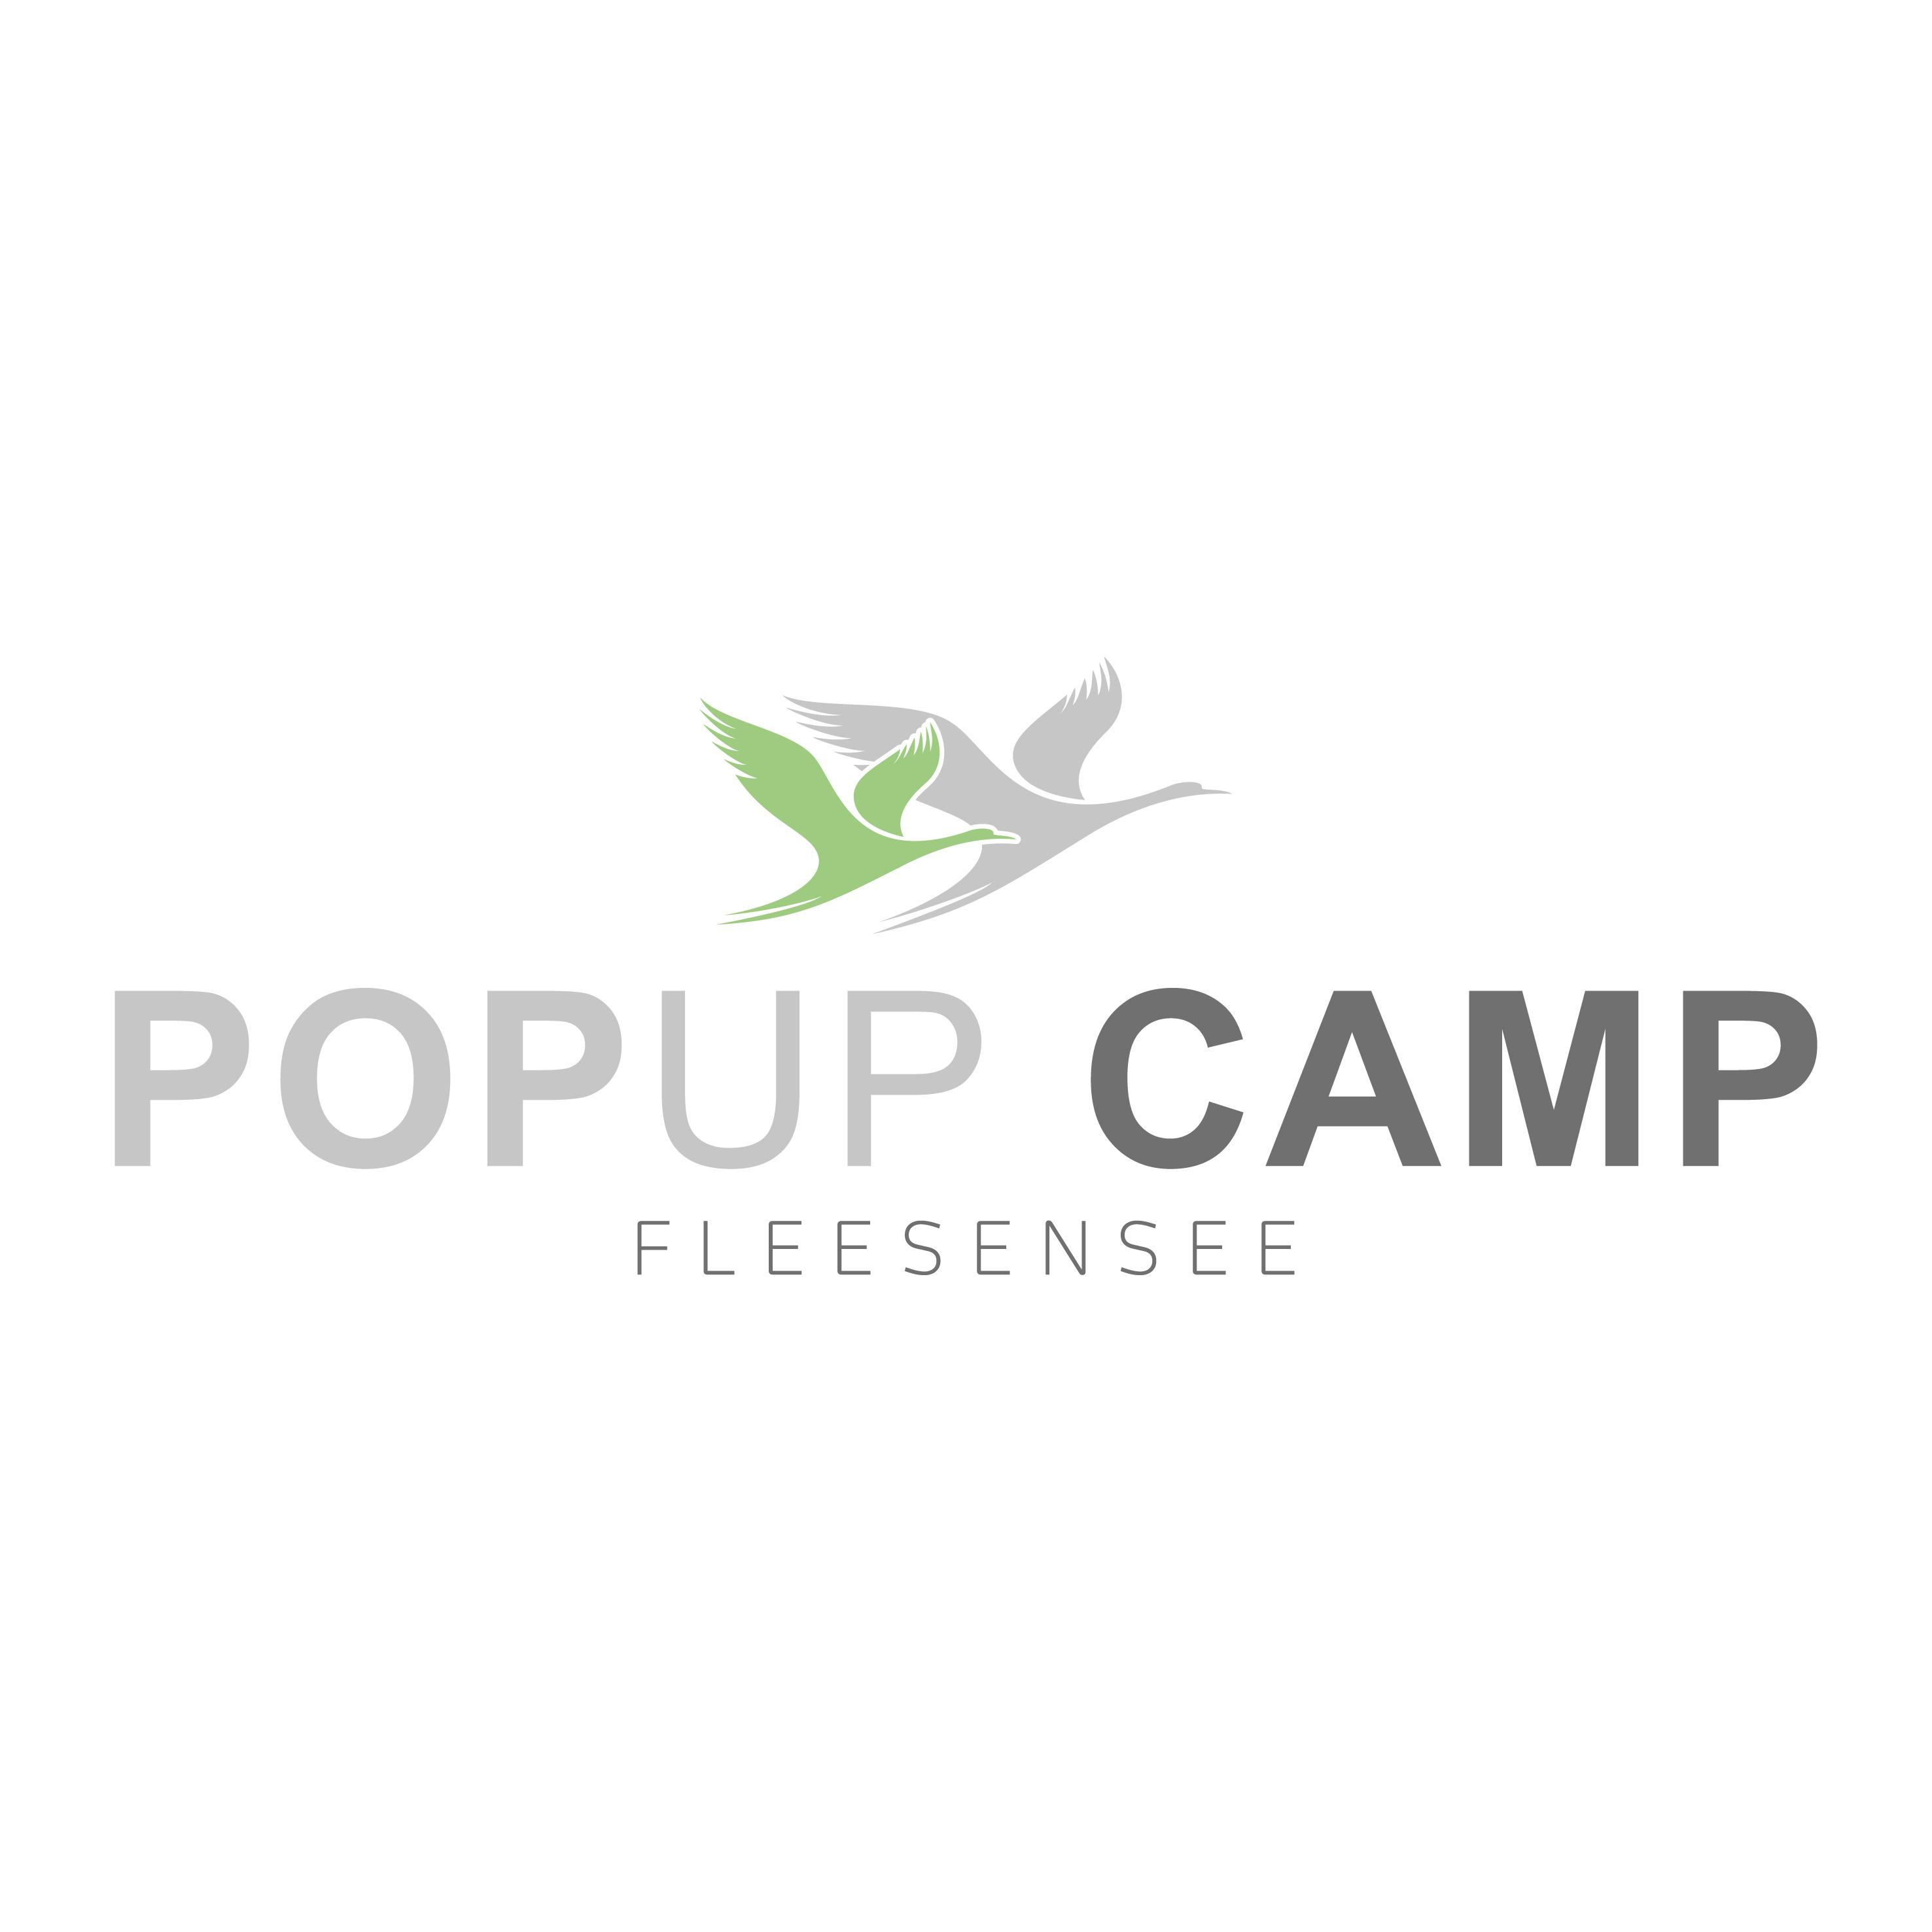 PopUp Camp Fleesensee Logo